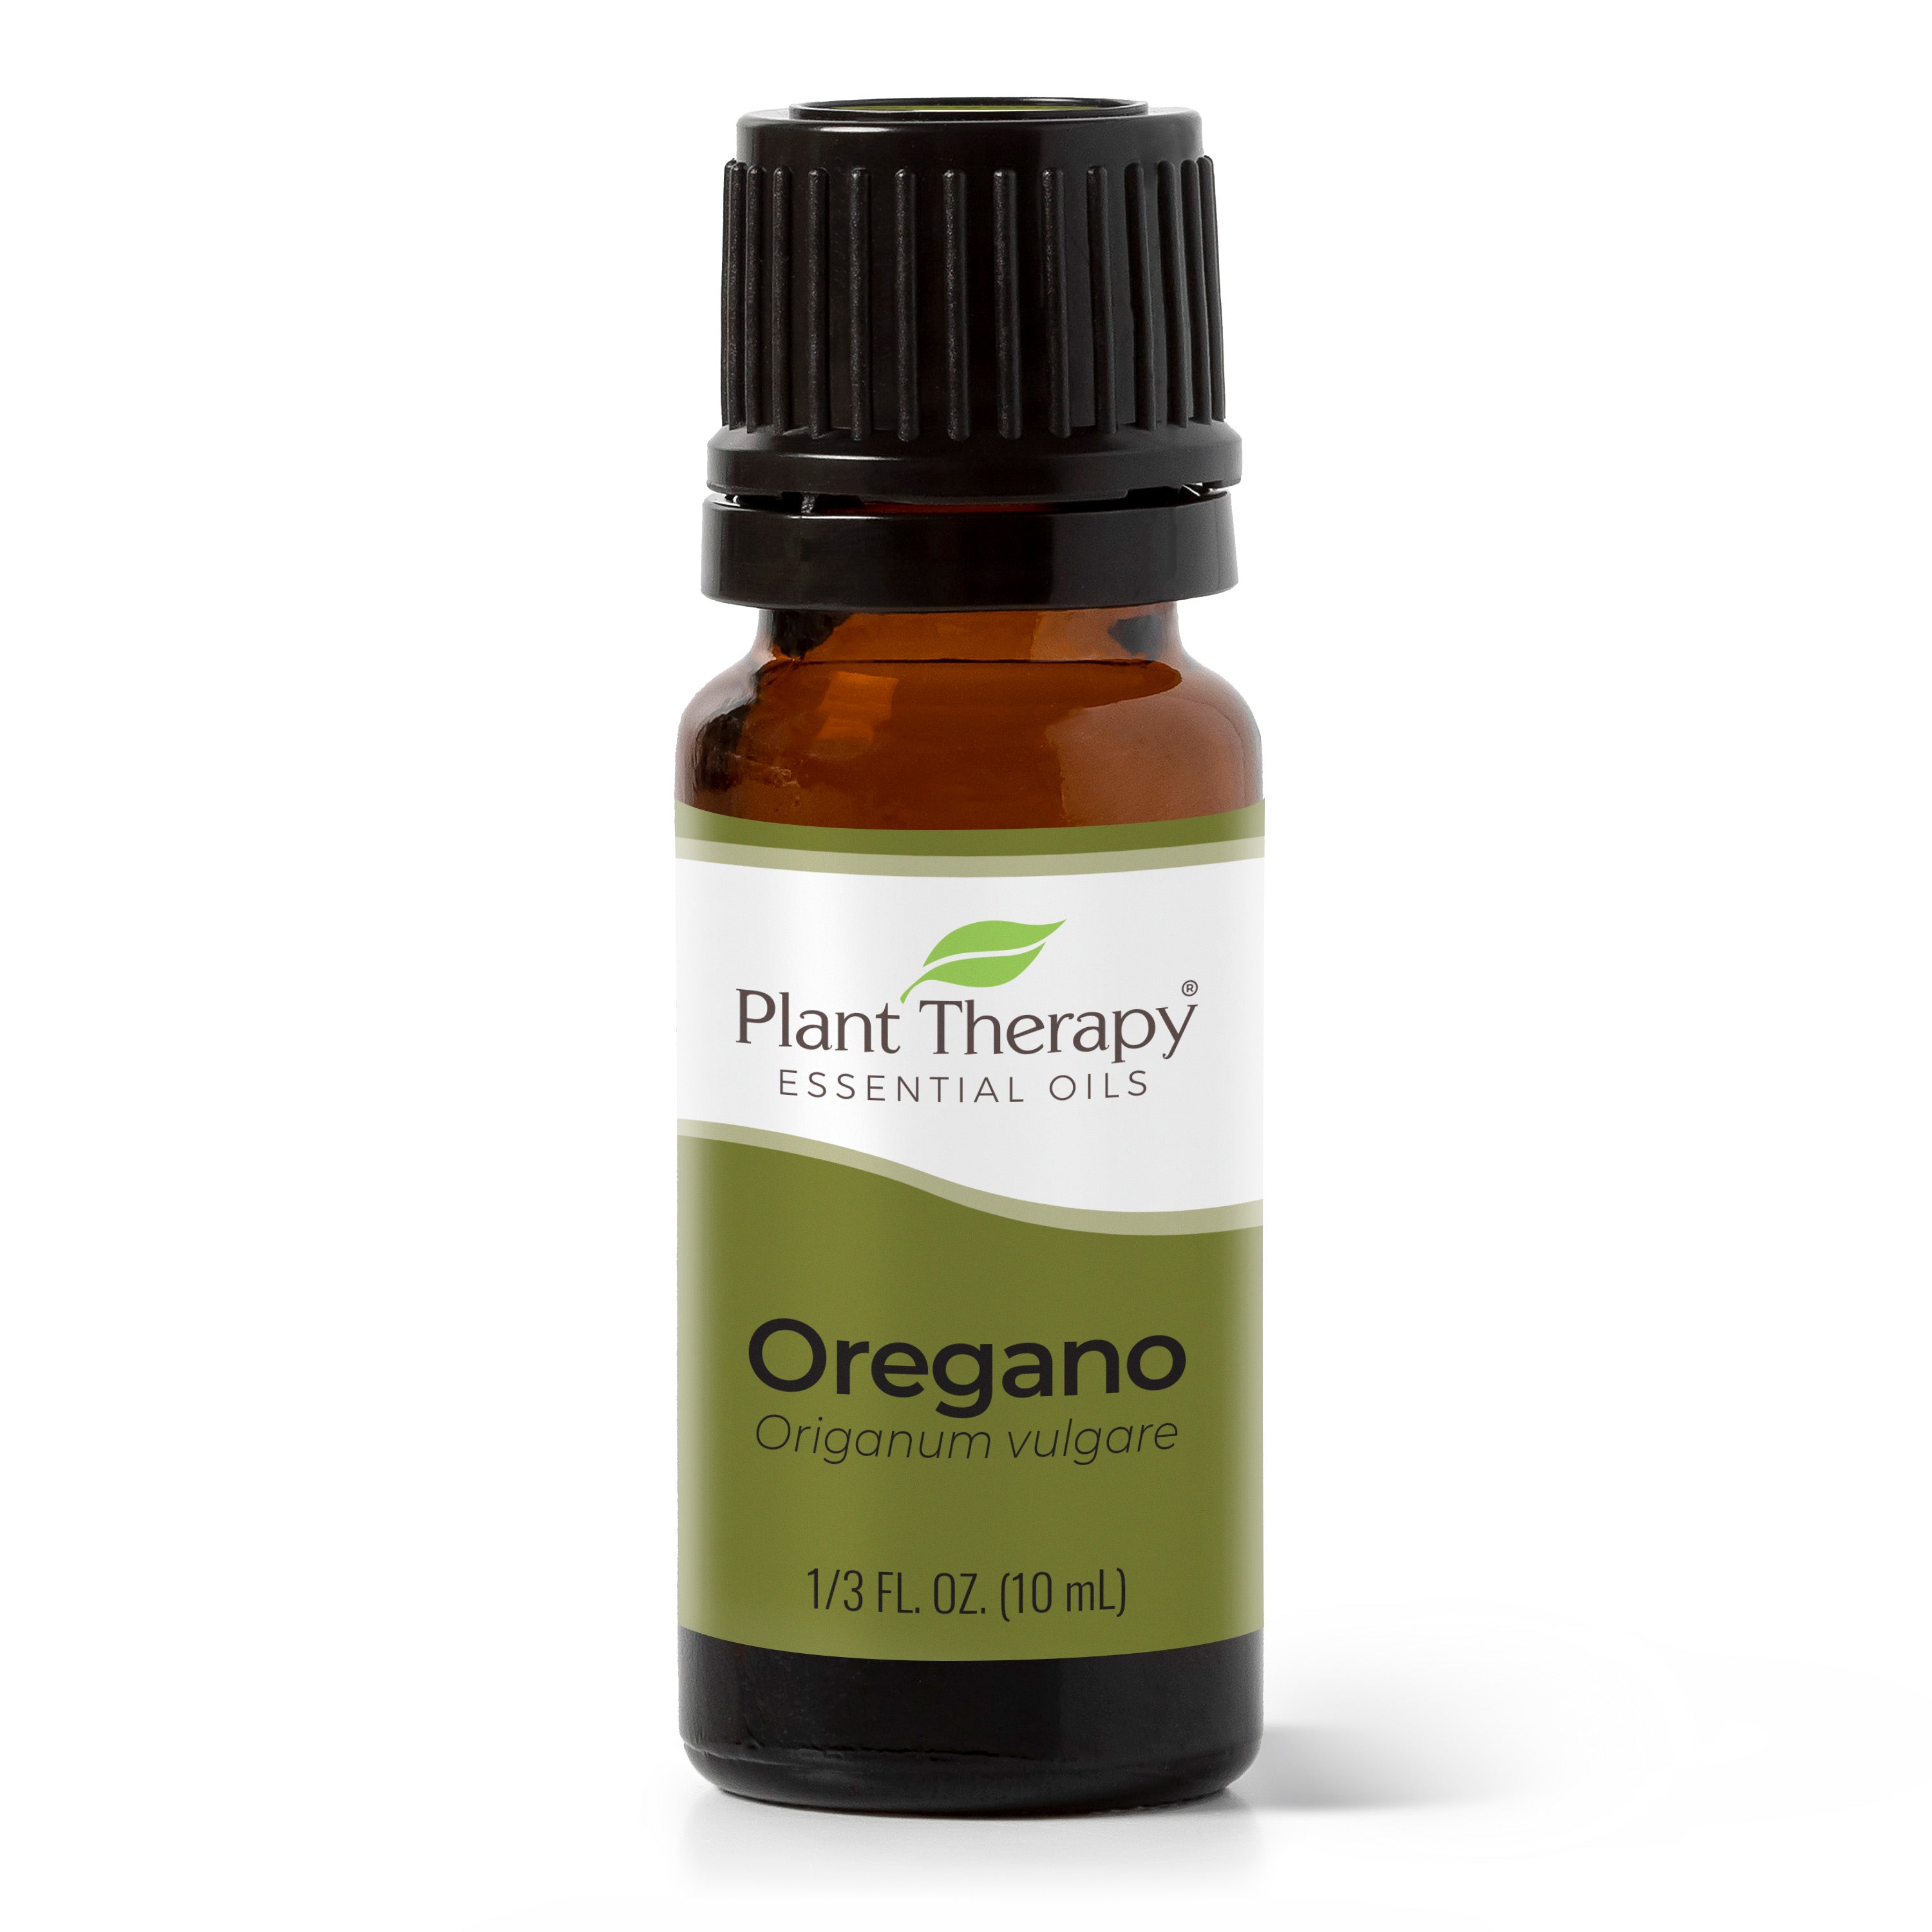 Plant Therapy Oregano Essential Oil 100% Pure Undiluted Natural Aromatherapy Therapeutic Grade 10 ml (1/3 oz)